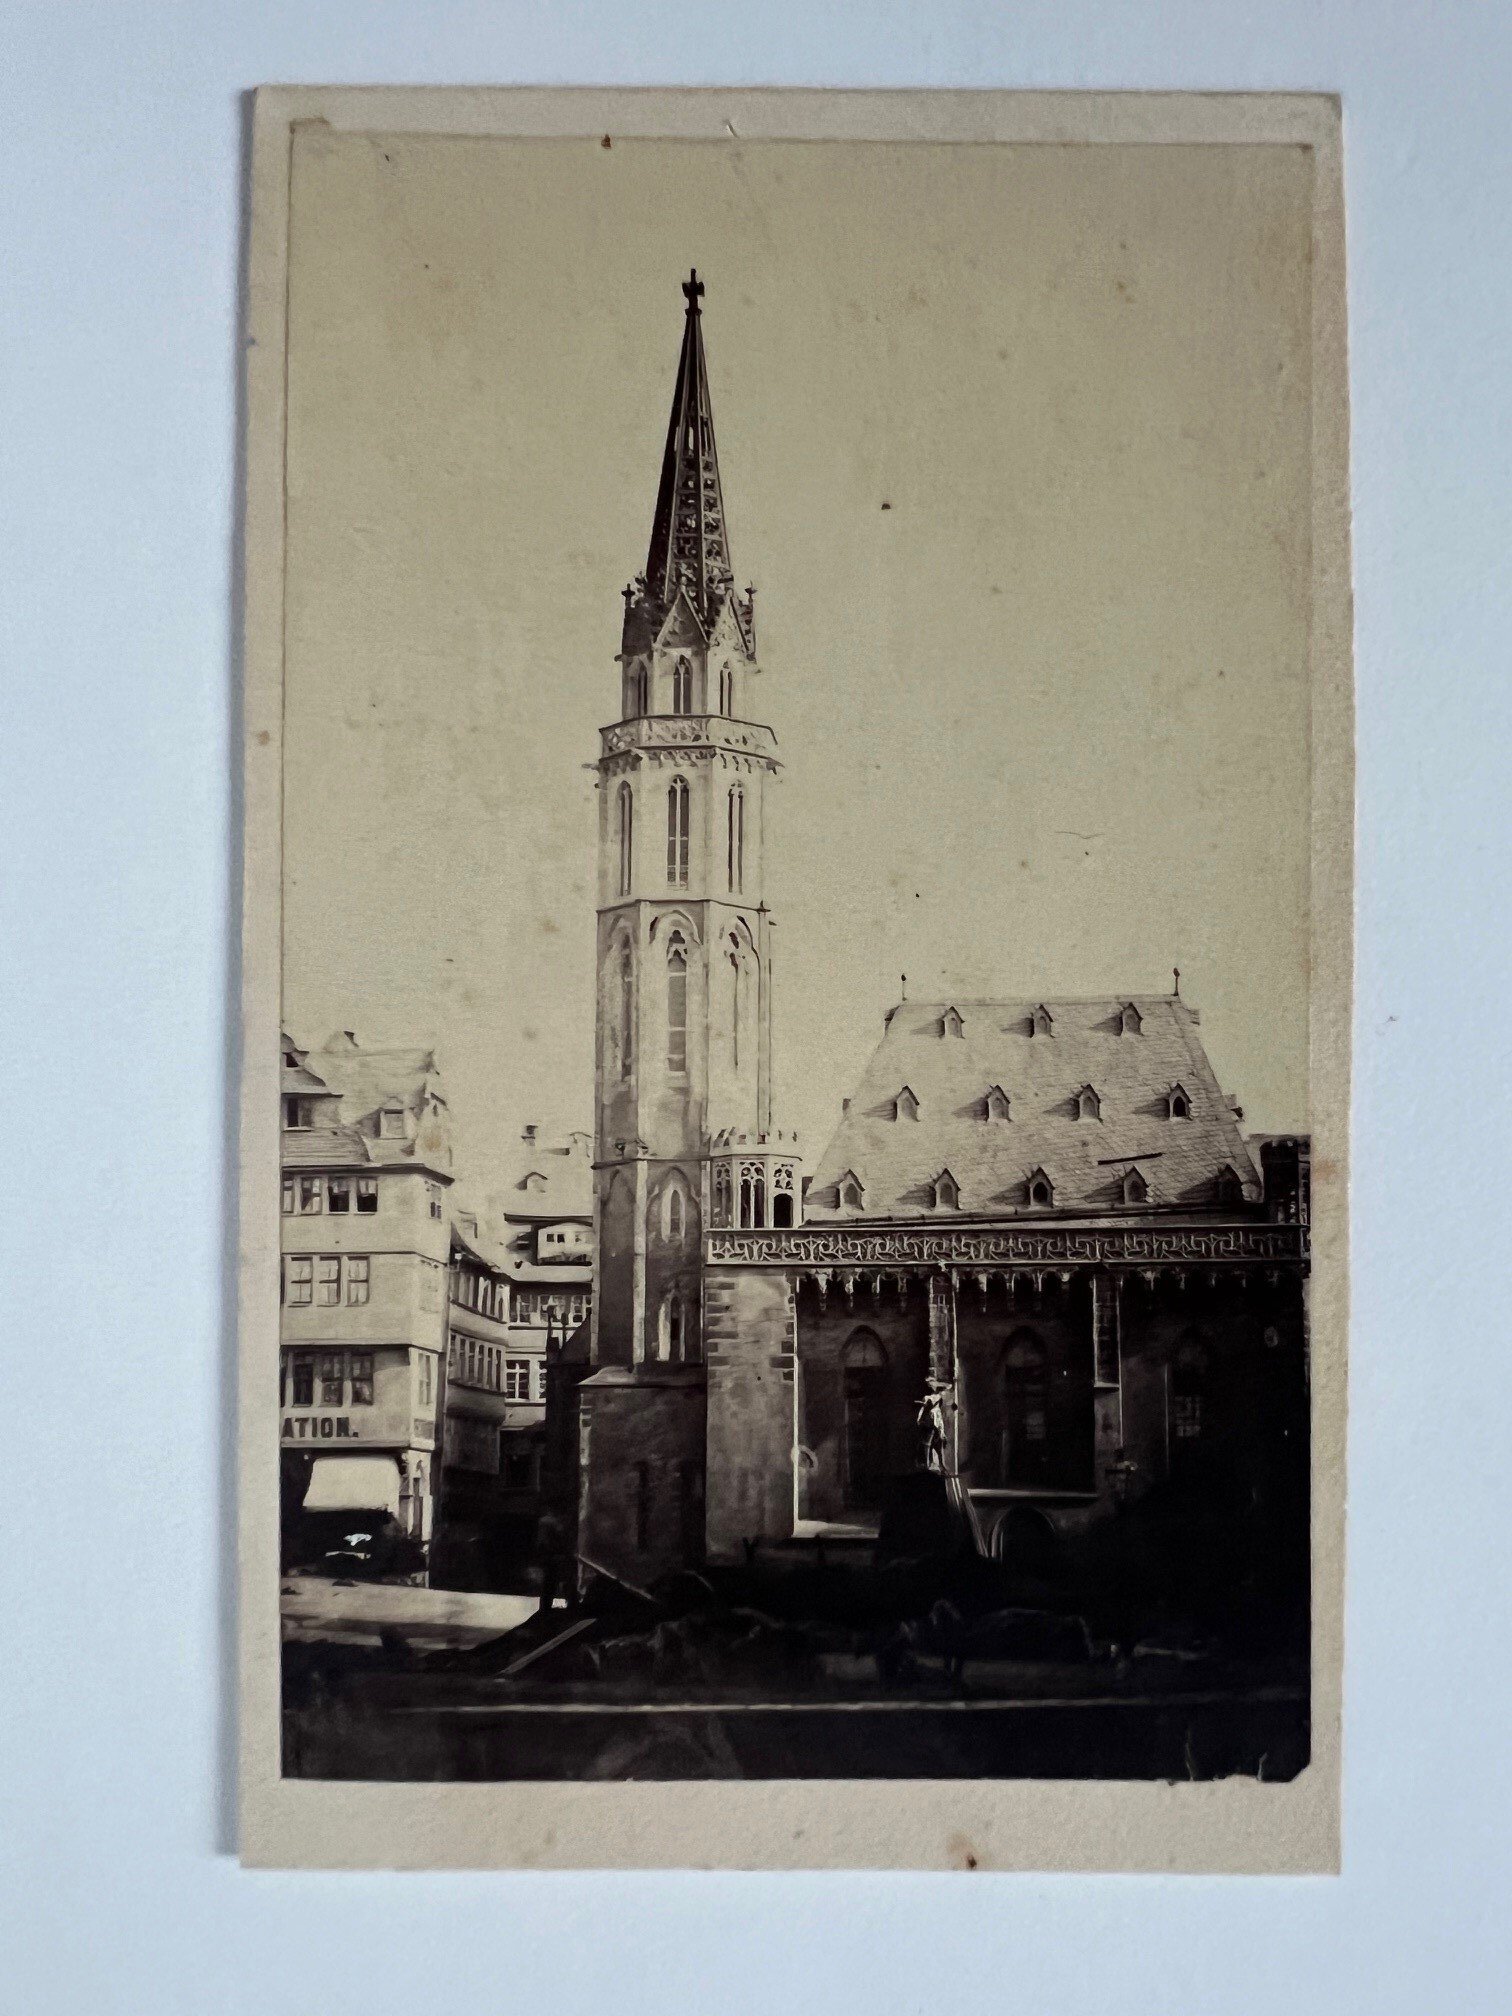 CdV, B. Sperling, Frankfurt, Nikolaikirche, ca. 1864. (Taunus-Rhein-Main - Regionalgeschichtliche Sammlung Dr. Stefan Naas CC BY-NC-SA)